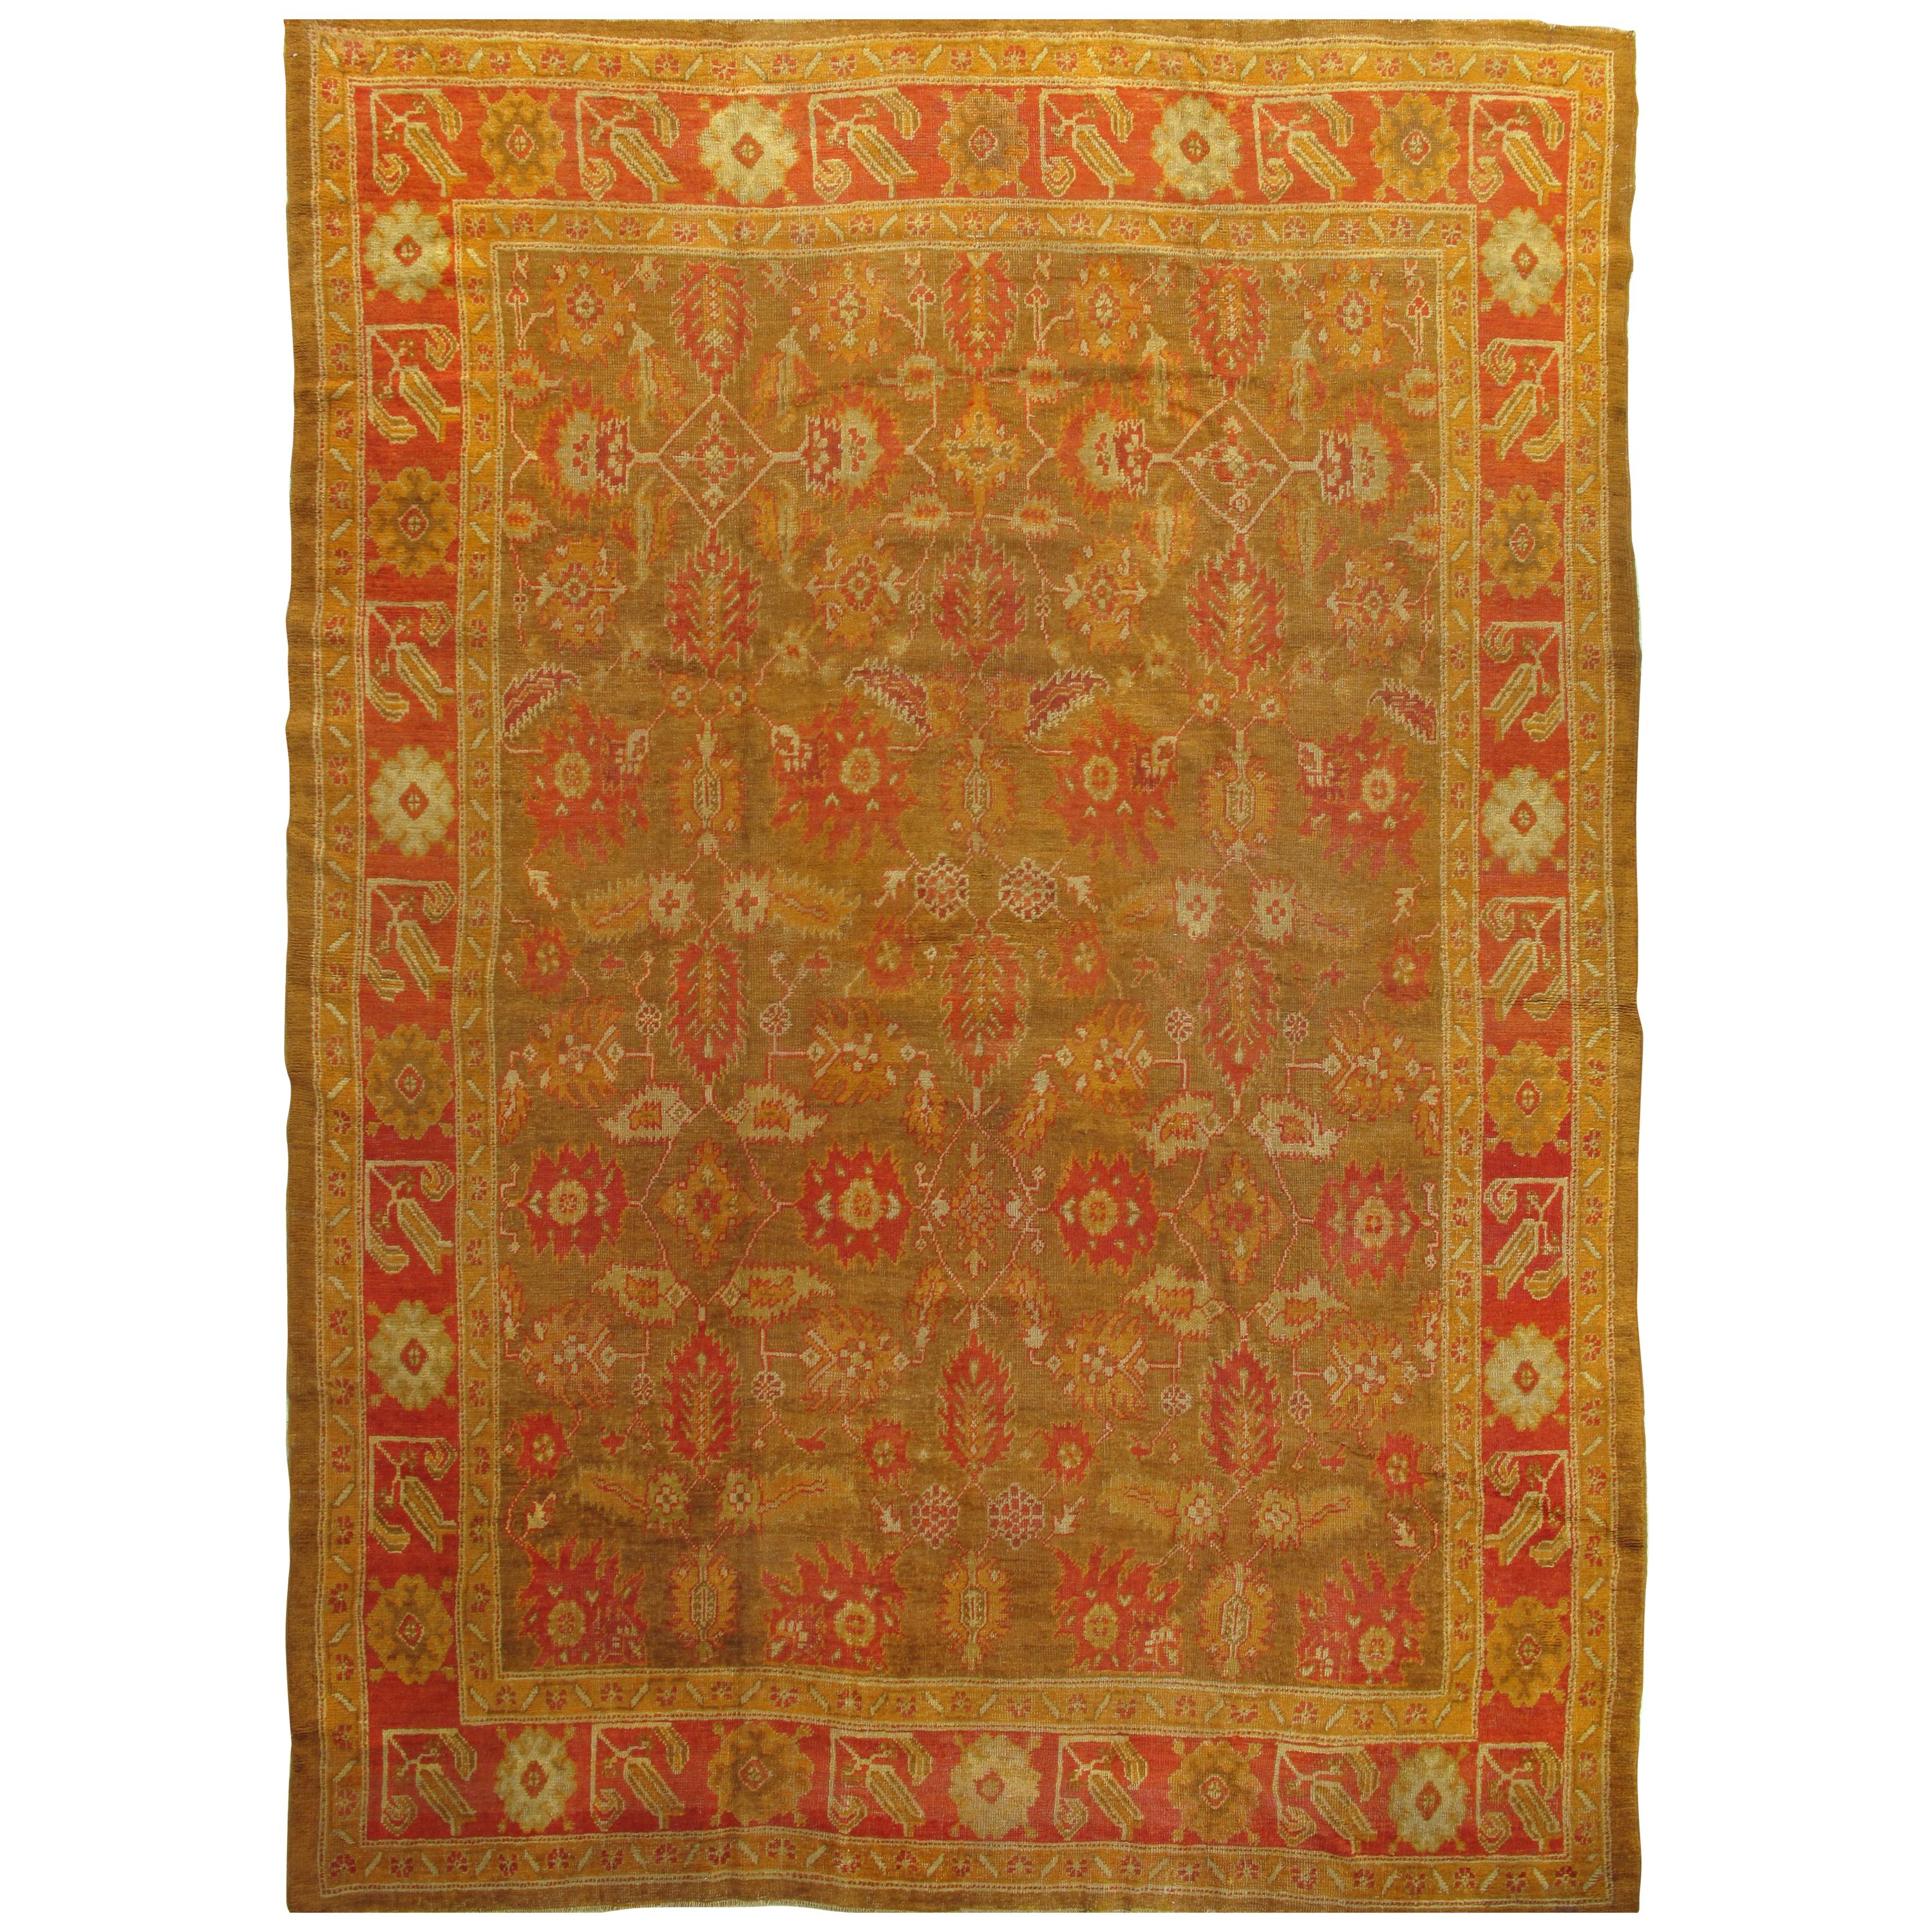 Antique Oushak Carpet, Oriental Rug, Handmade Green, Saffron, Ivory and Coral